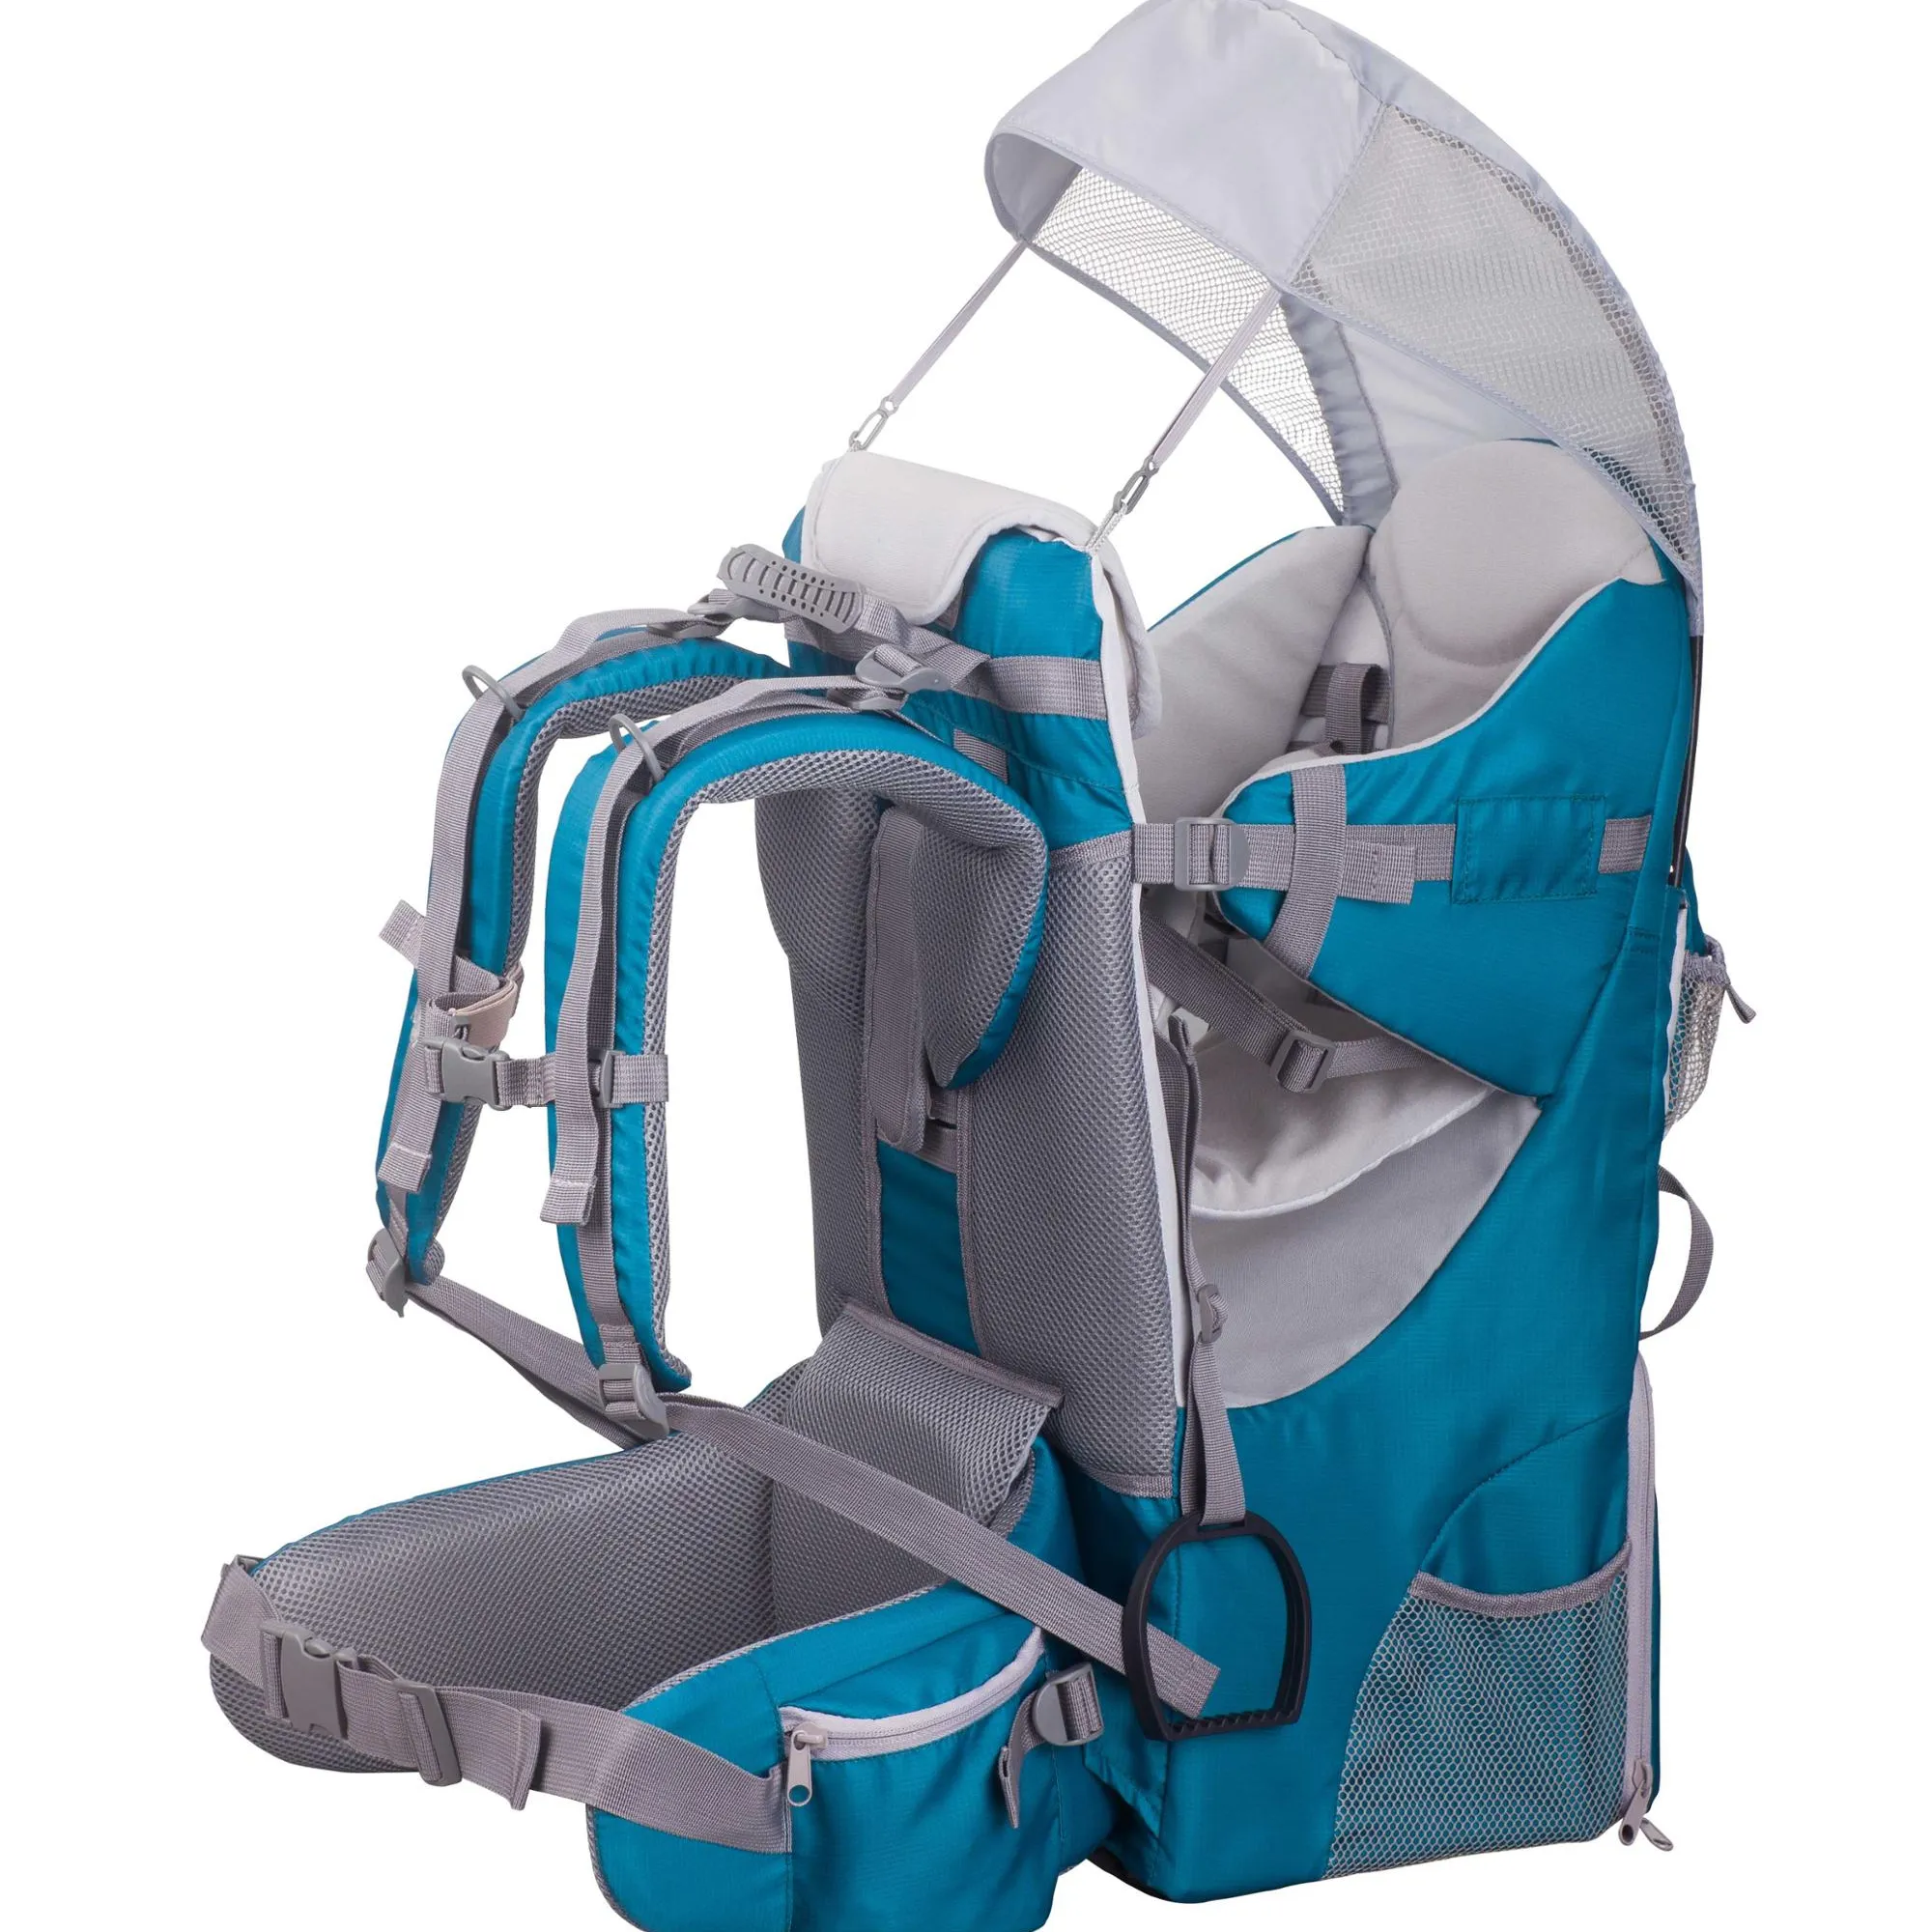 Kinder Träger/baby rucksack (mit EN13209 zertifikat) baby produkt